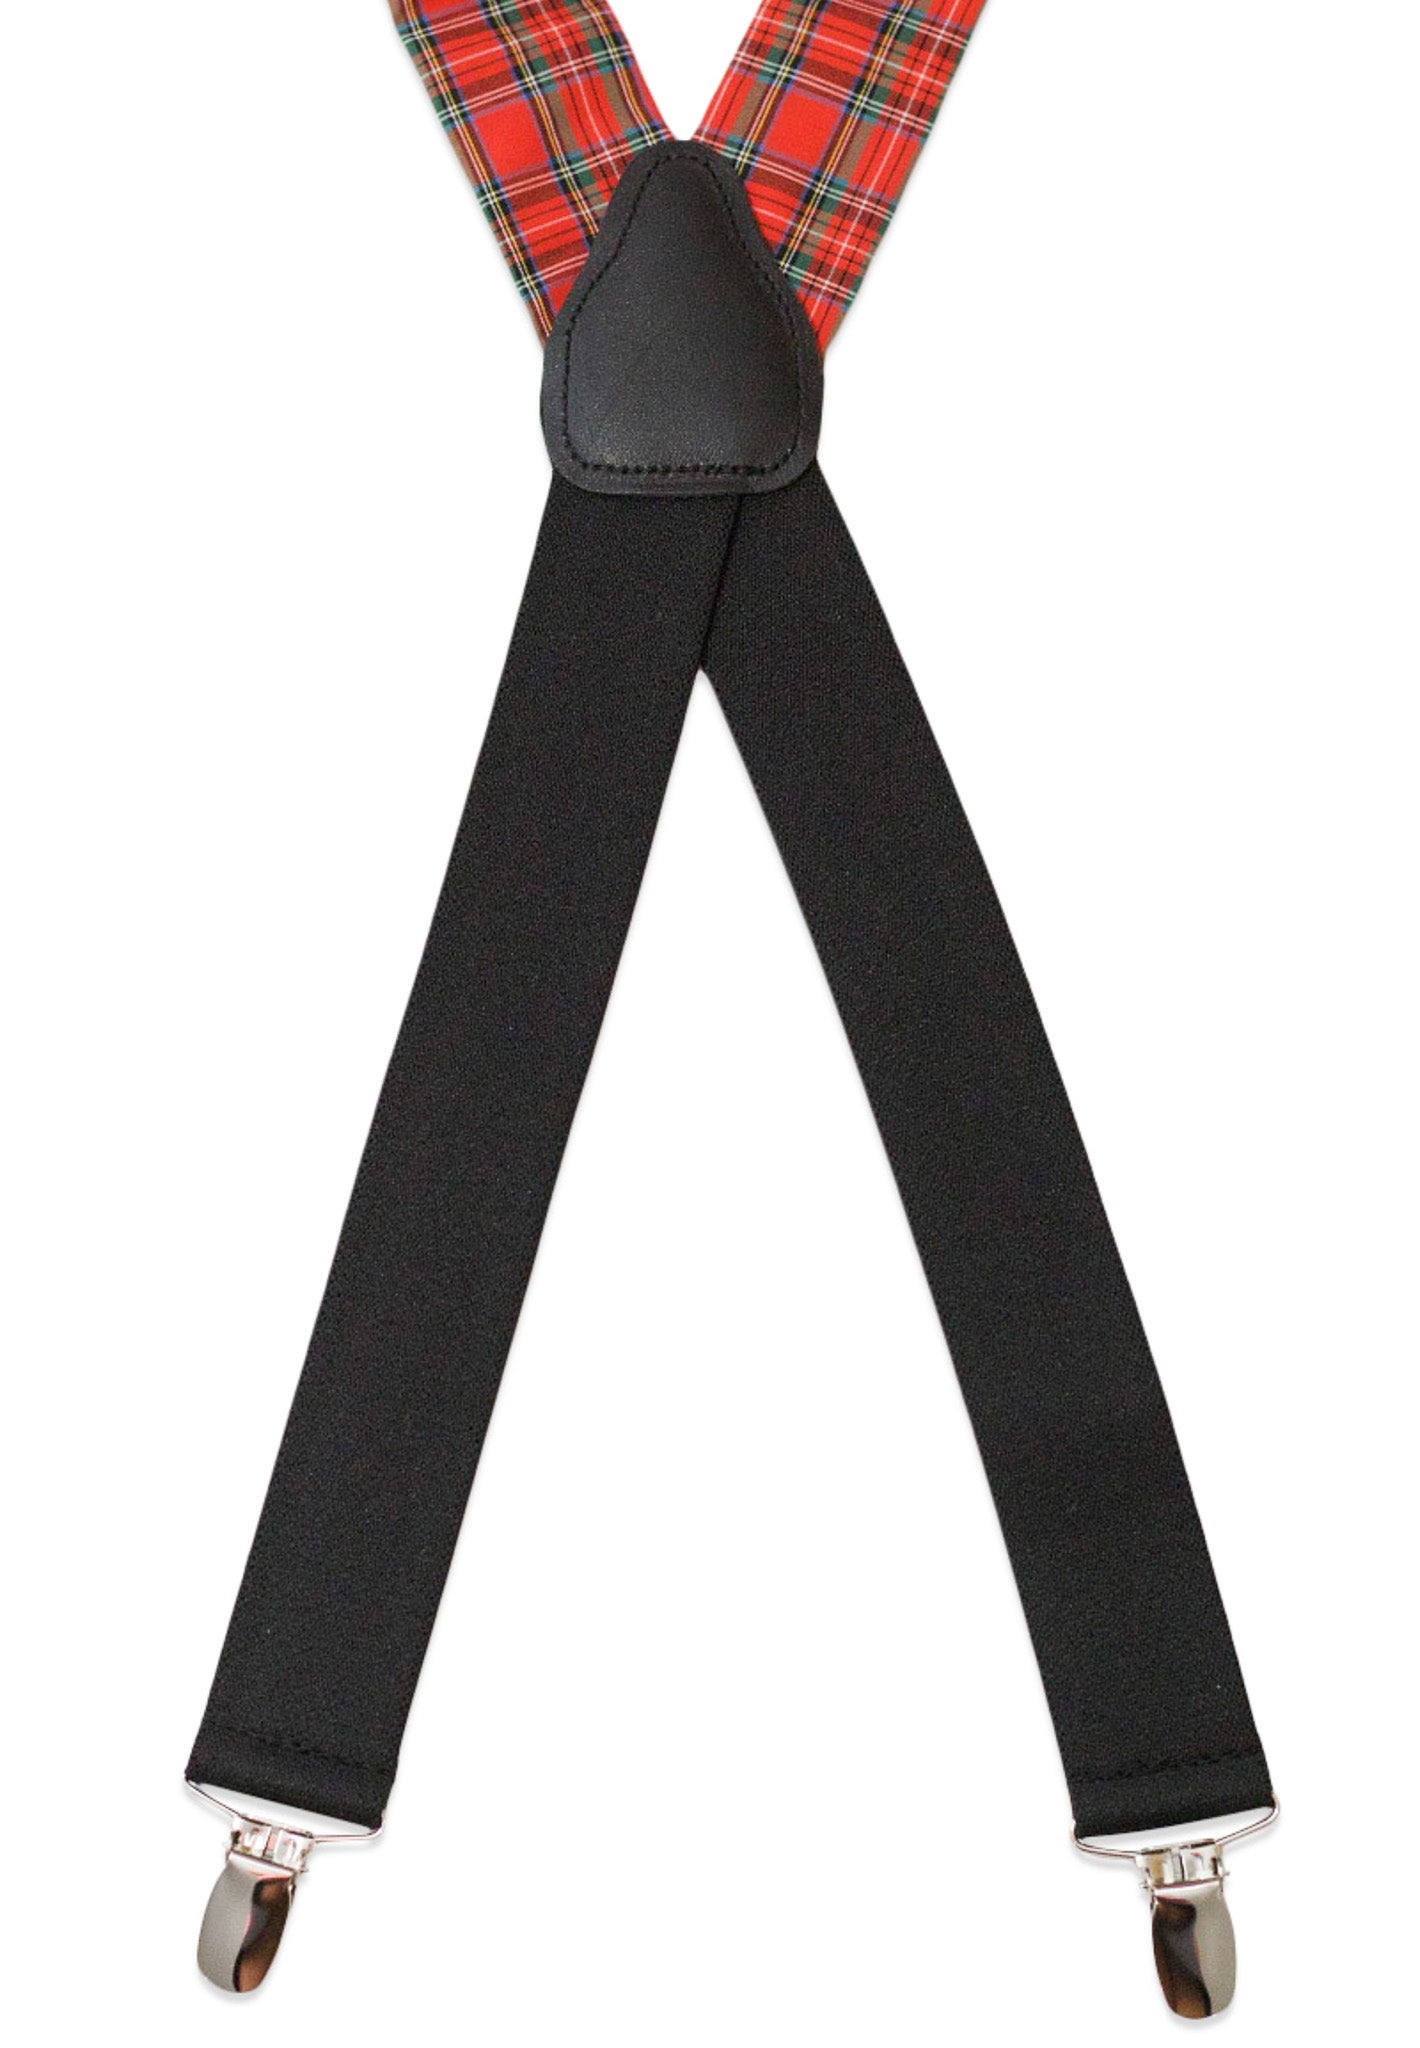 Black Dot Suspenders  Handcrafted Formal Attire for Men - High Cotton